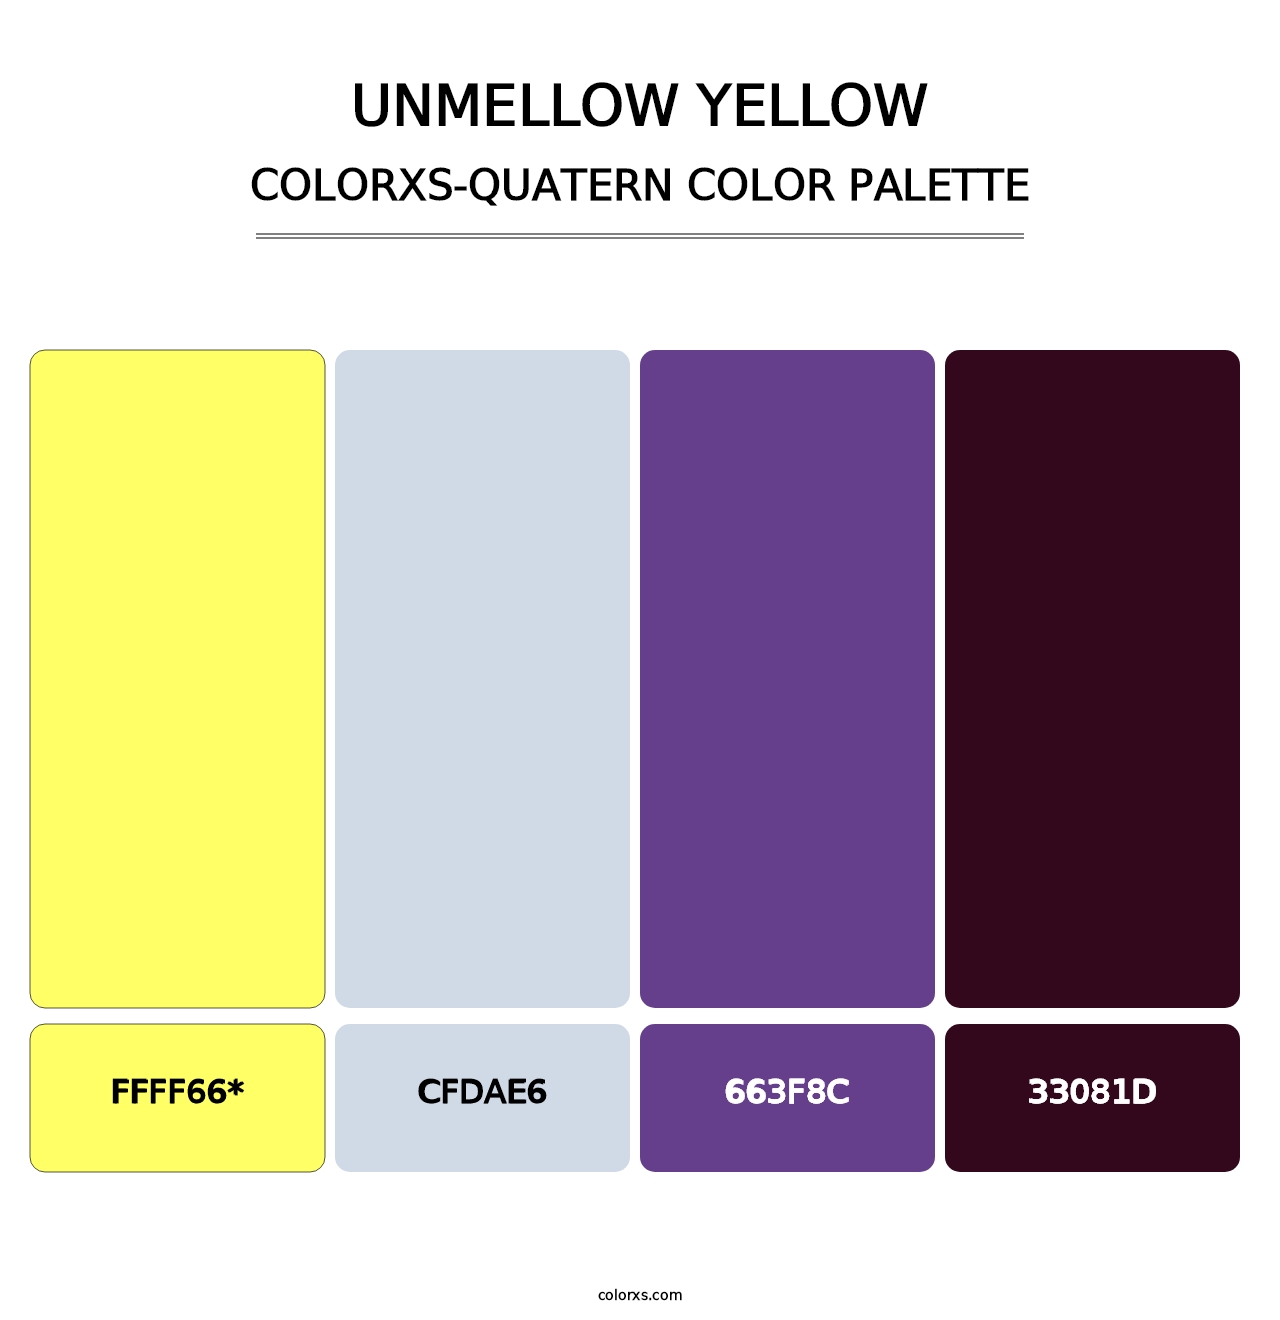 Unmellow Yellow - Colorxs Quatern Palette